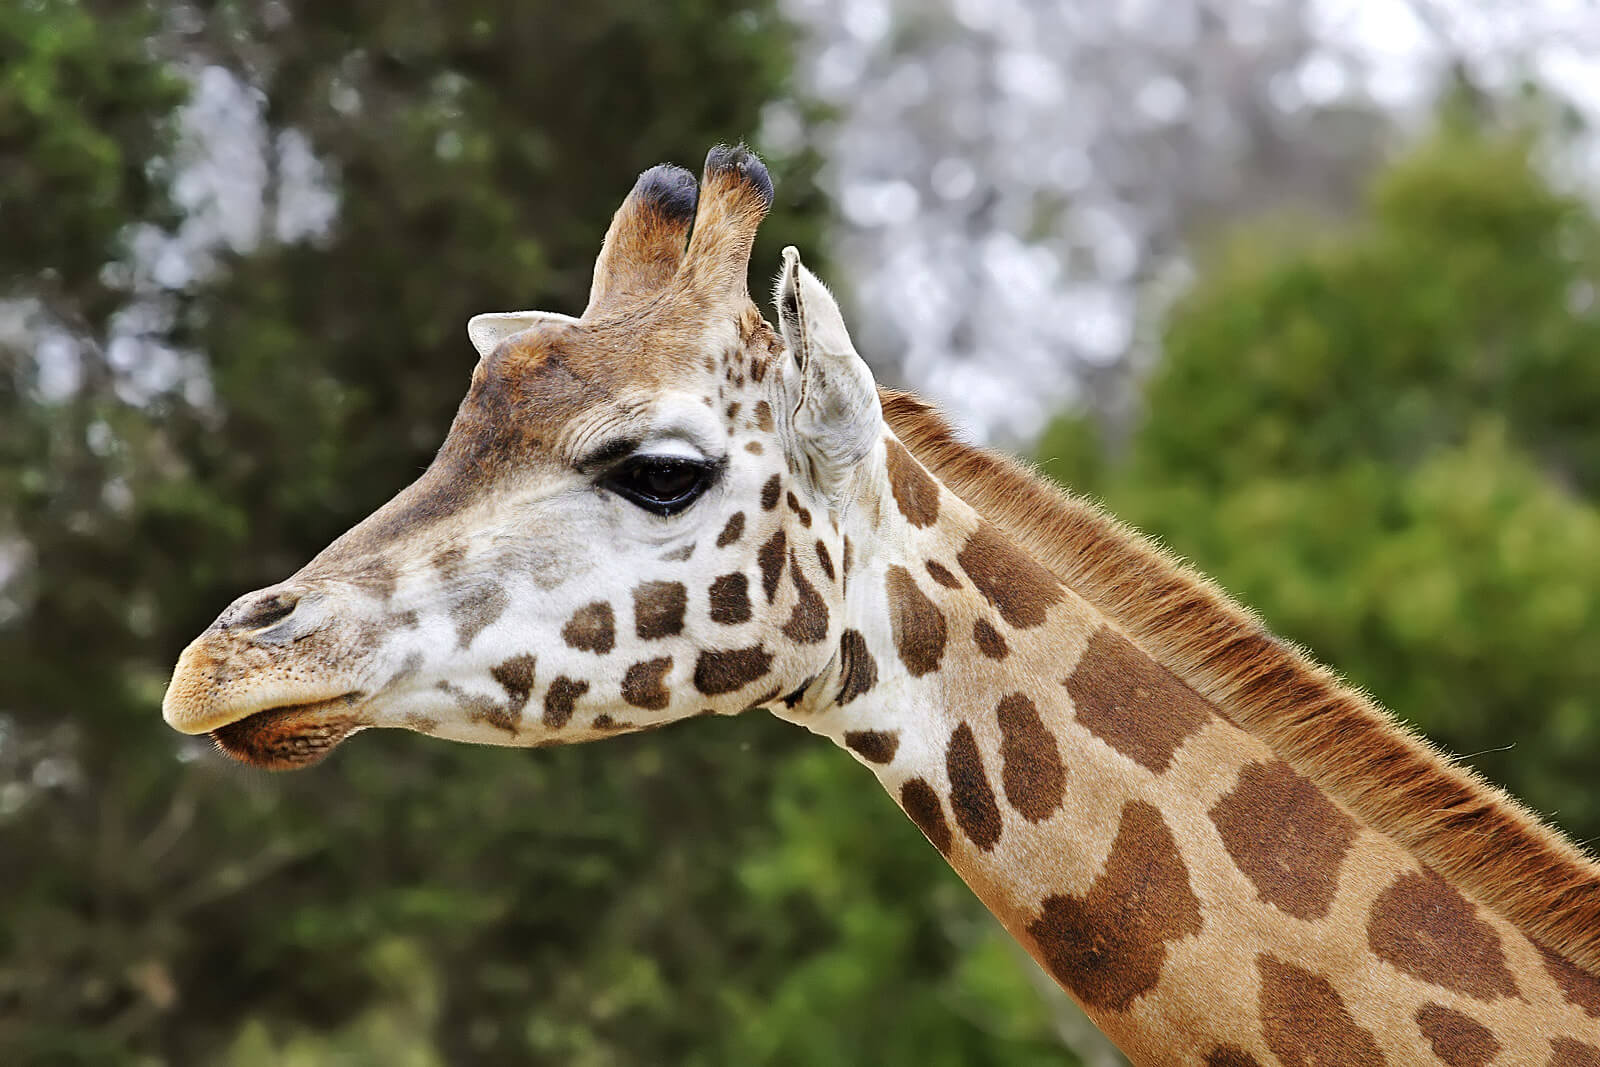 A giraffe at Melbourne Zoo